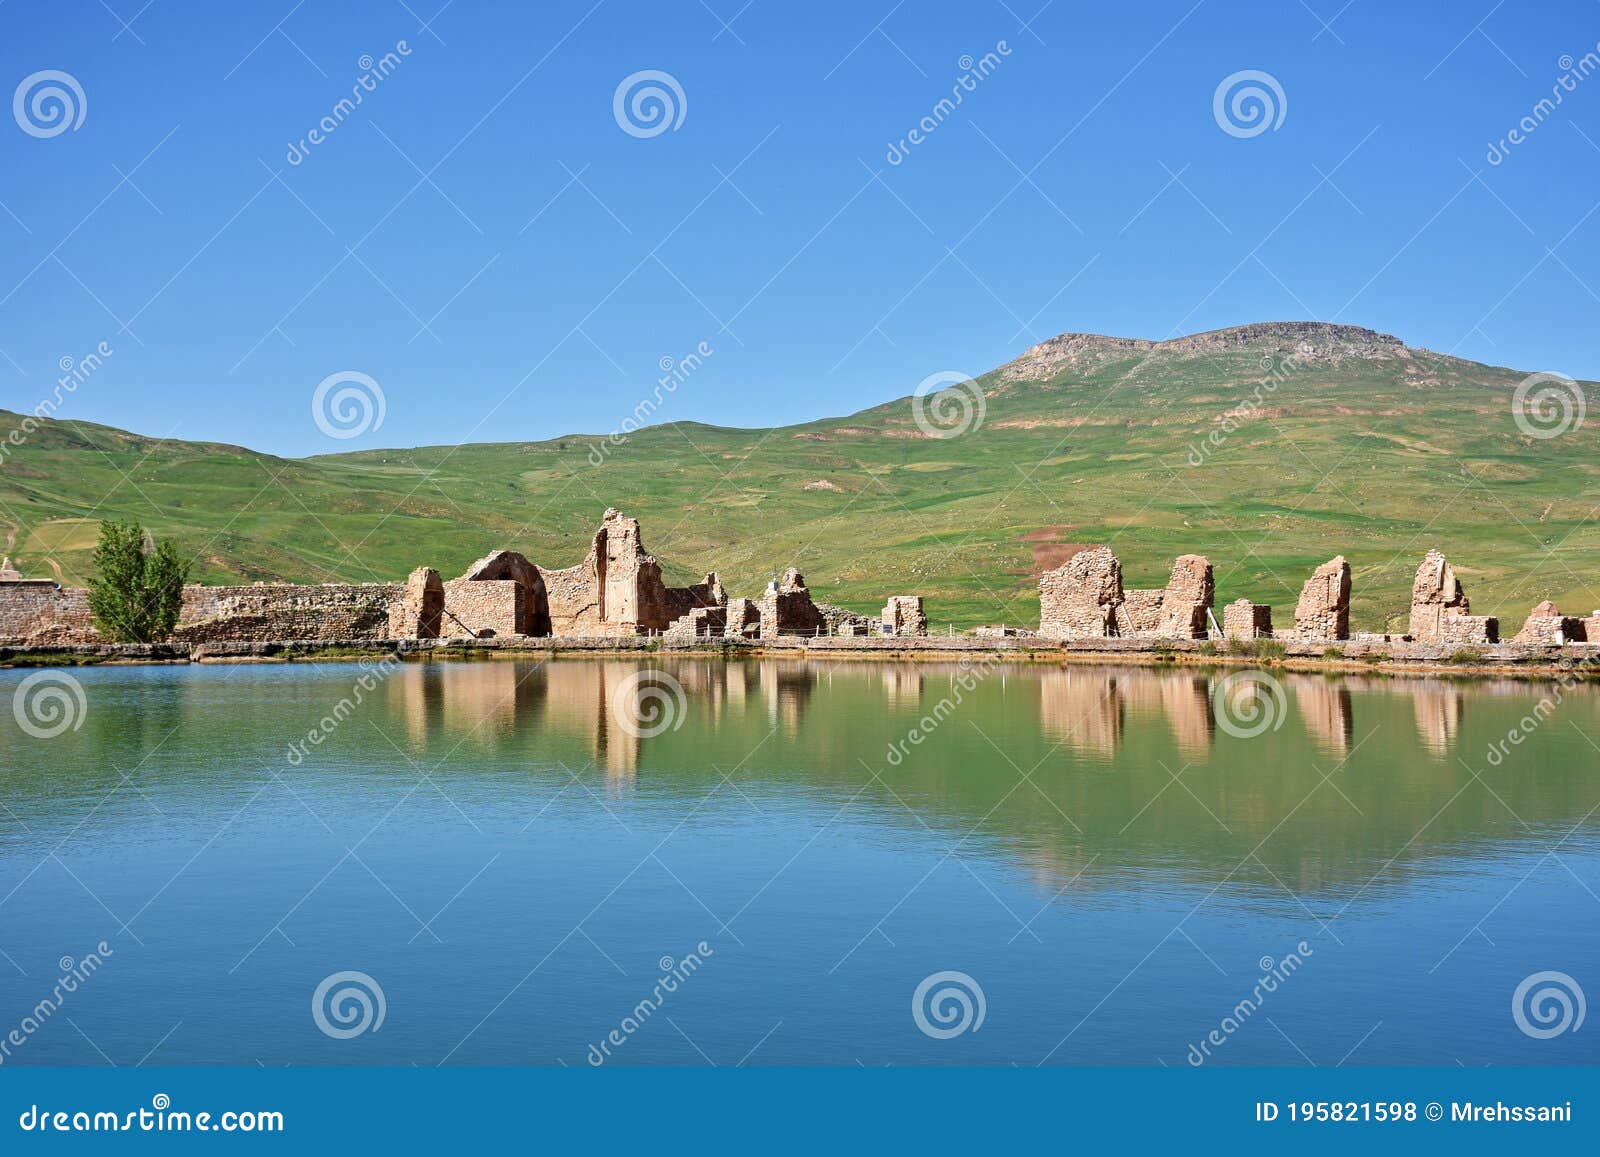 takht-e soleyman lake and zoroastrian temple , unesco world heritage , iran